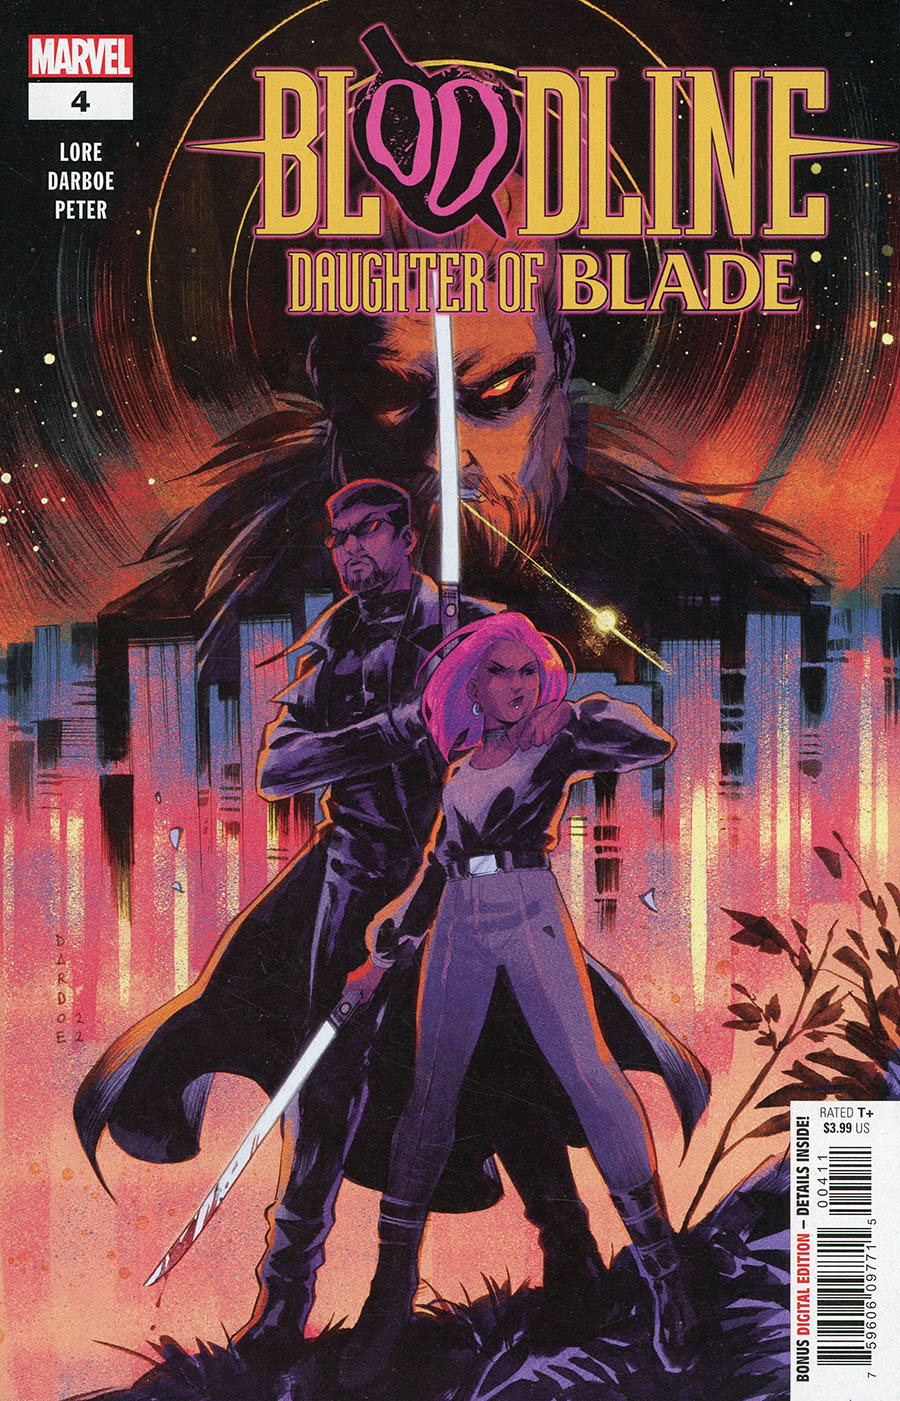 Bloodline Daughter Of Blade #4 Cover A Regular Karen S Darboe Cover